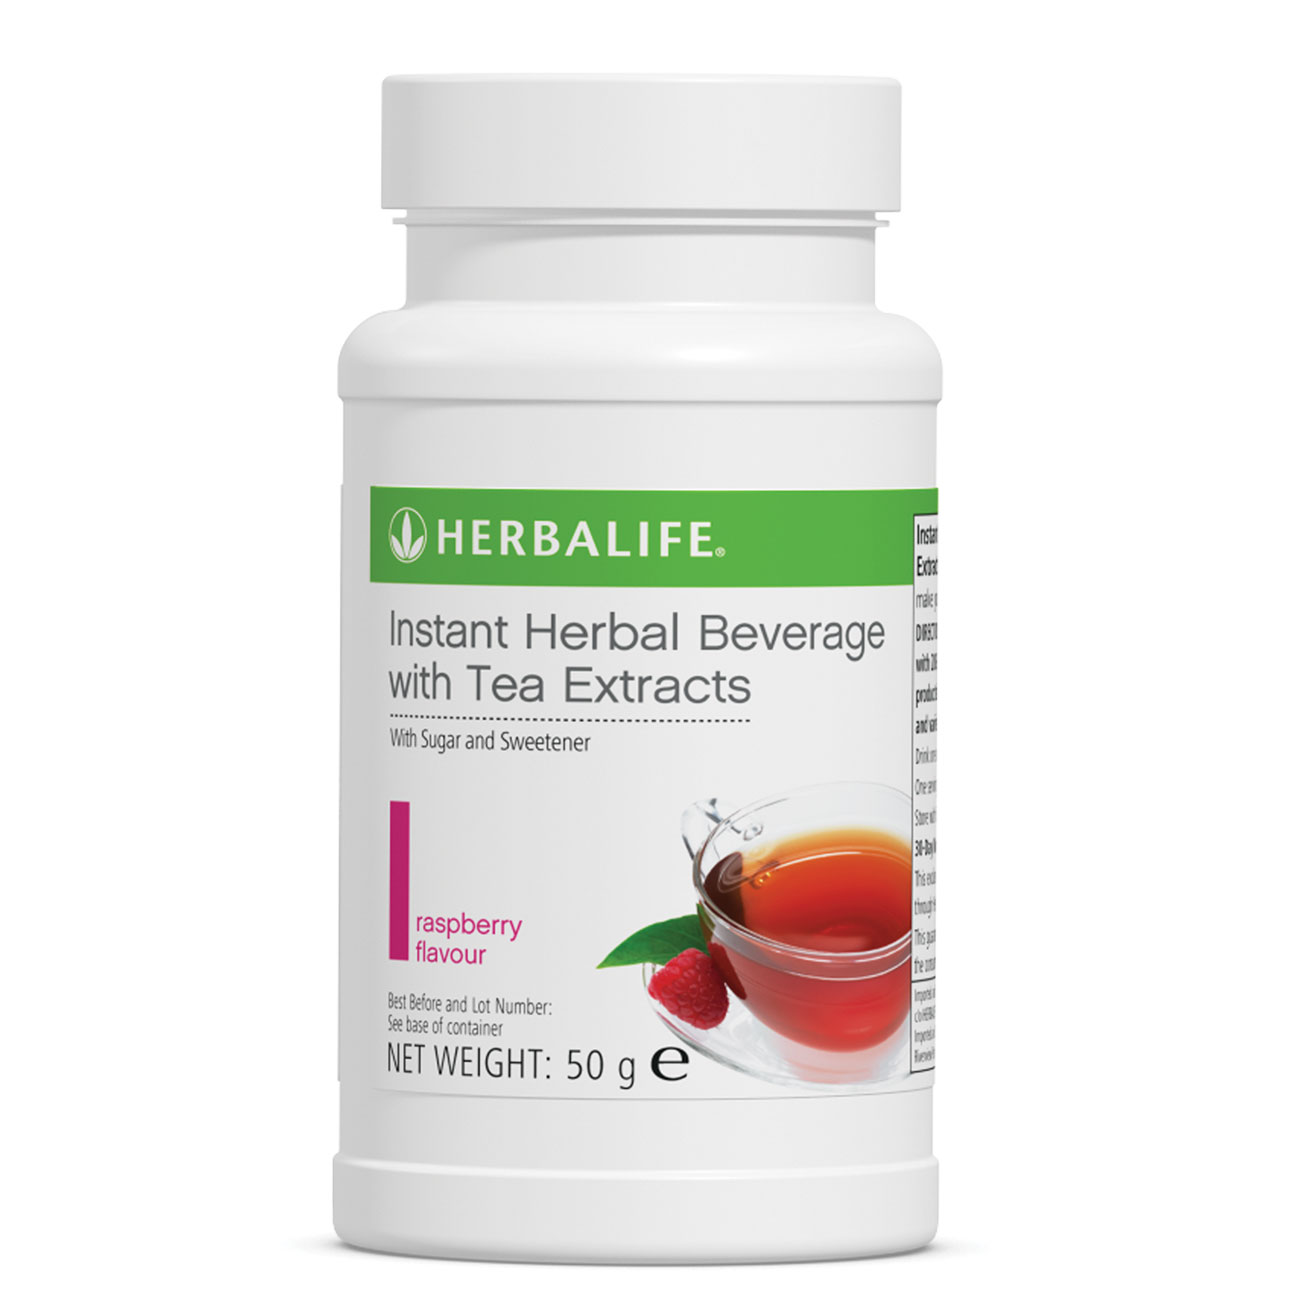 Instant Herbal Beverage  Raspberry product shot.